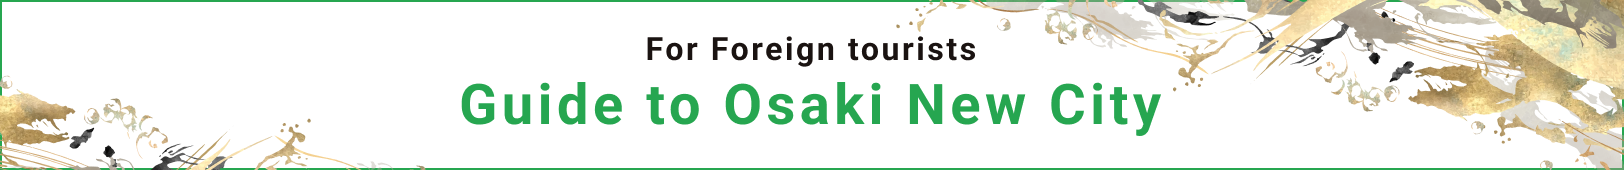 Guide to Osaki New City